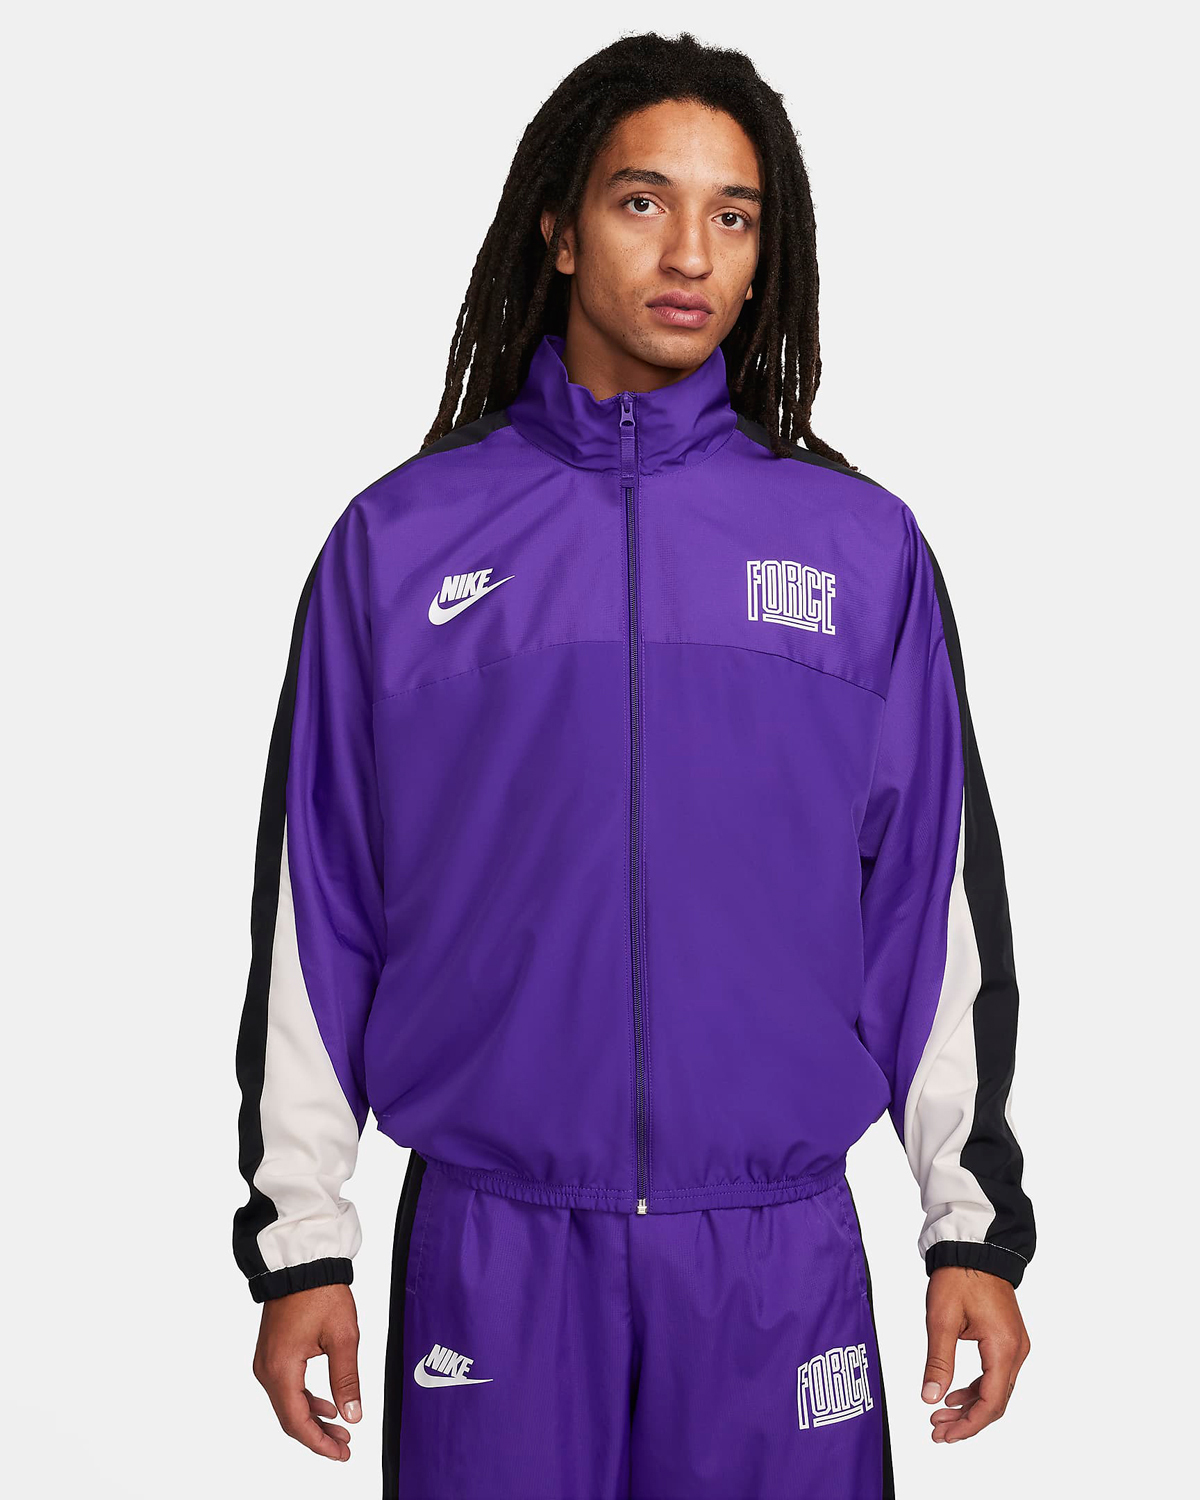 Nike Starting 5 Basketball Jacket Field Purple